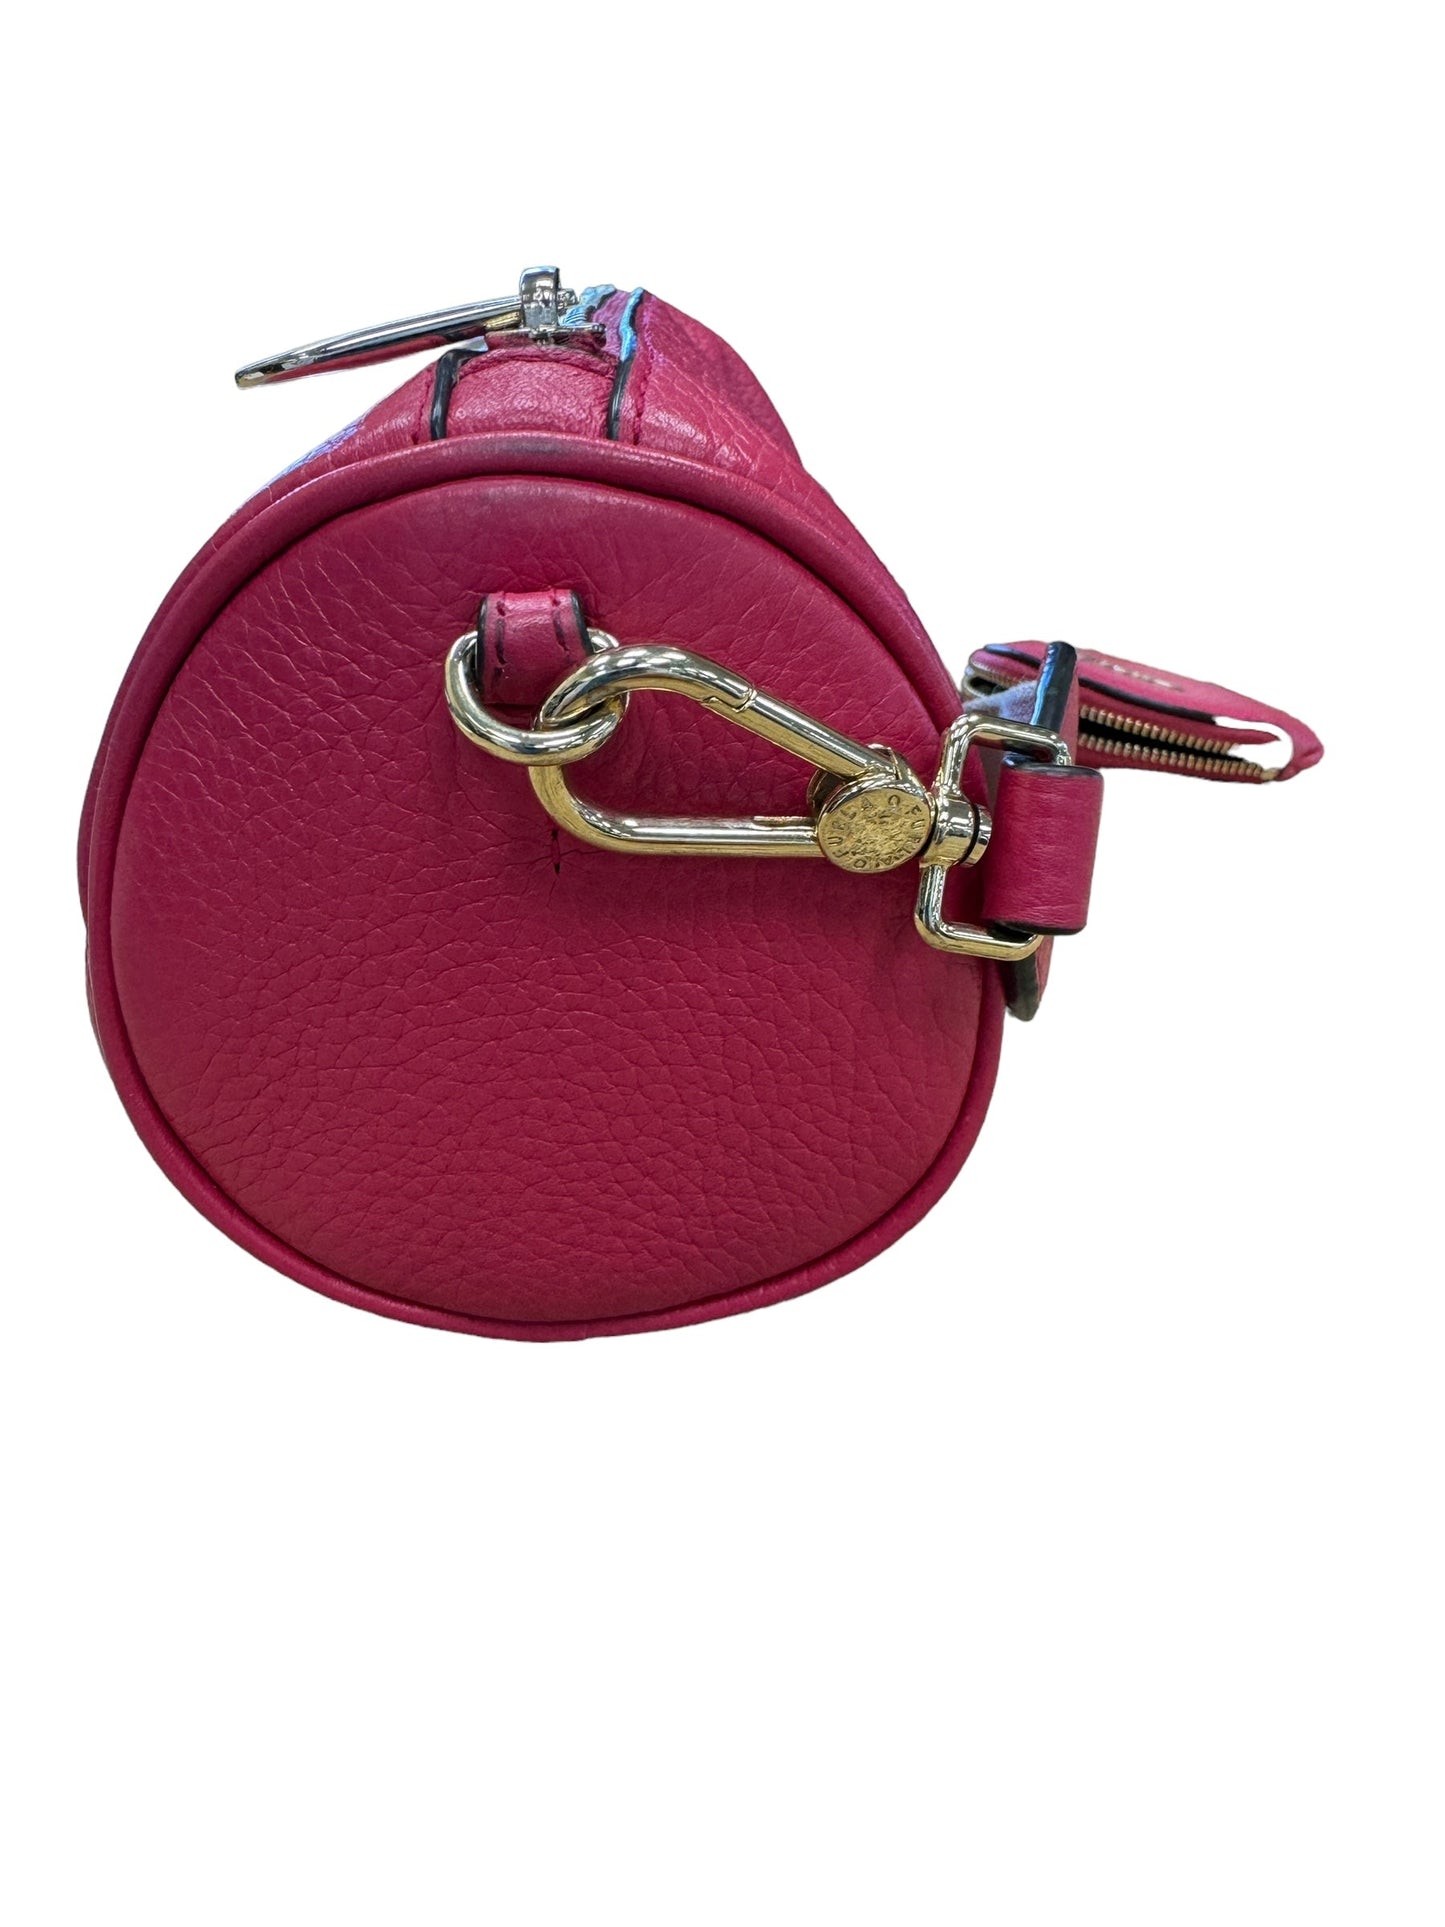 Handbag Designer Furla, Size Small